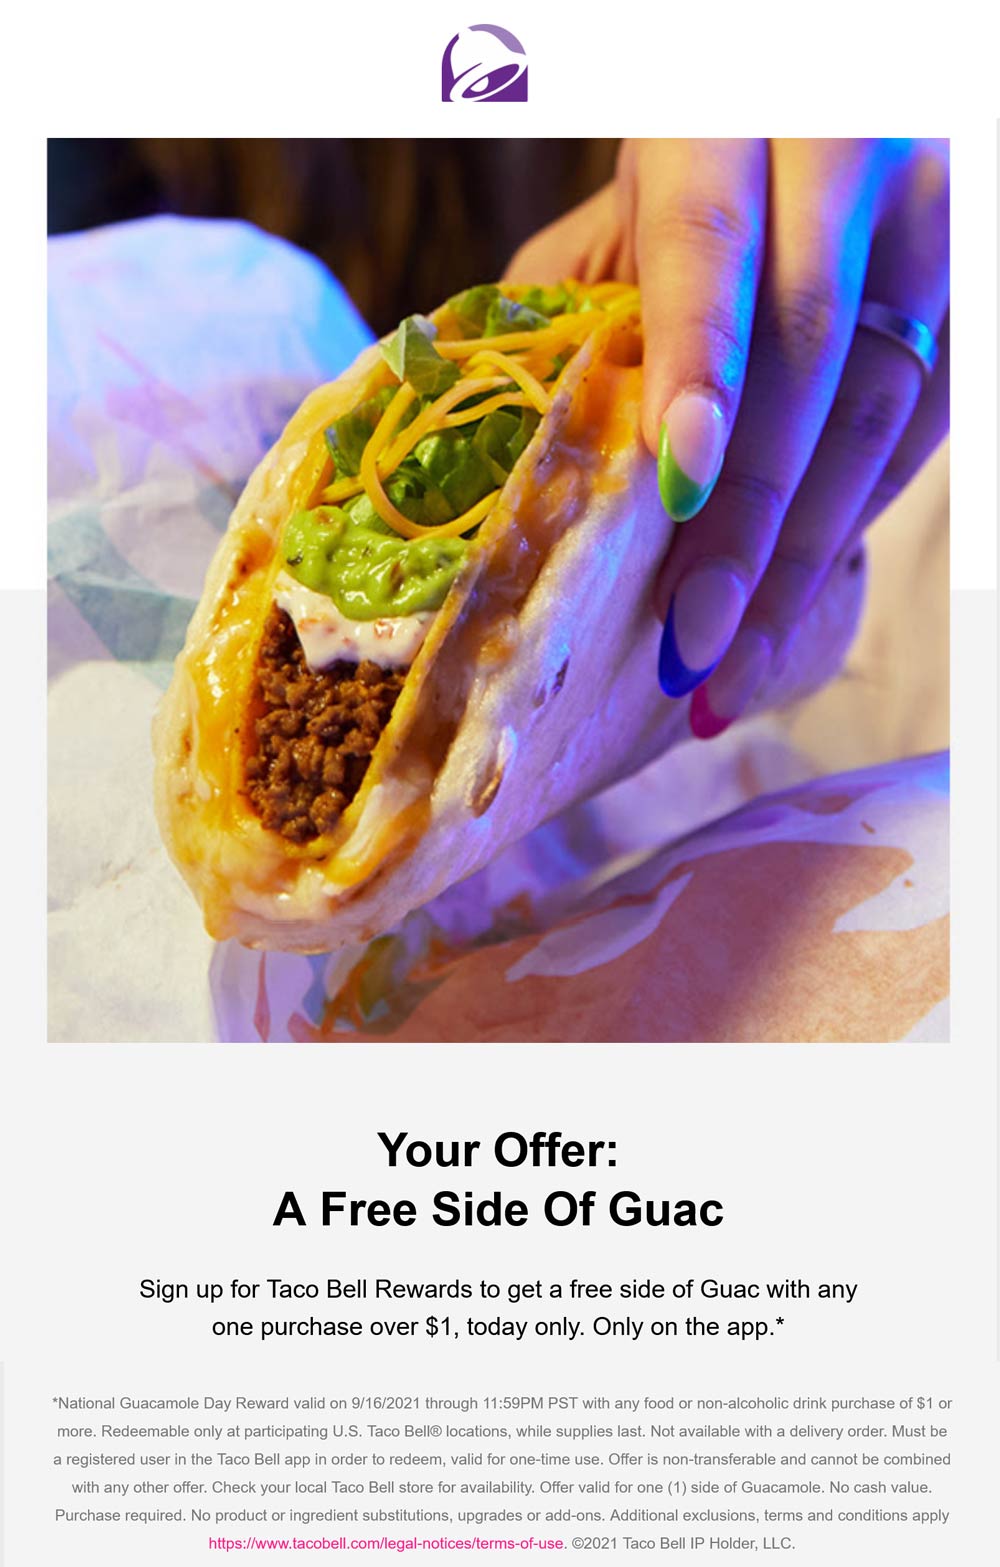 Taco Bell restaurants Coupon  Free guacamole with $1 spent today at Taco Bell restaurants #tacobell 